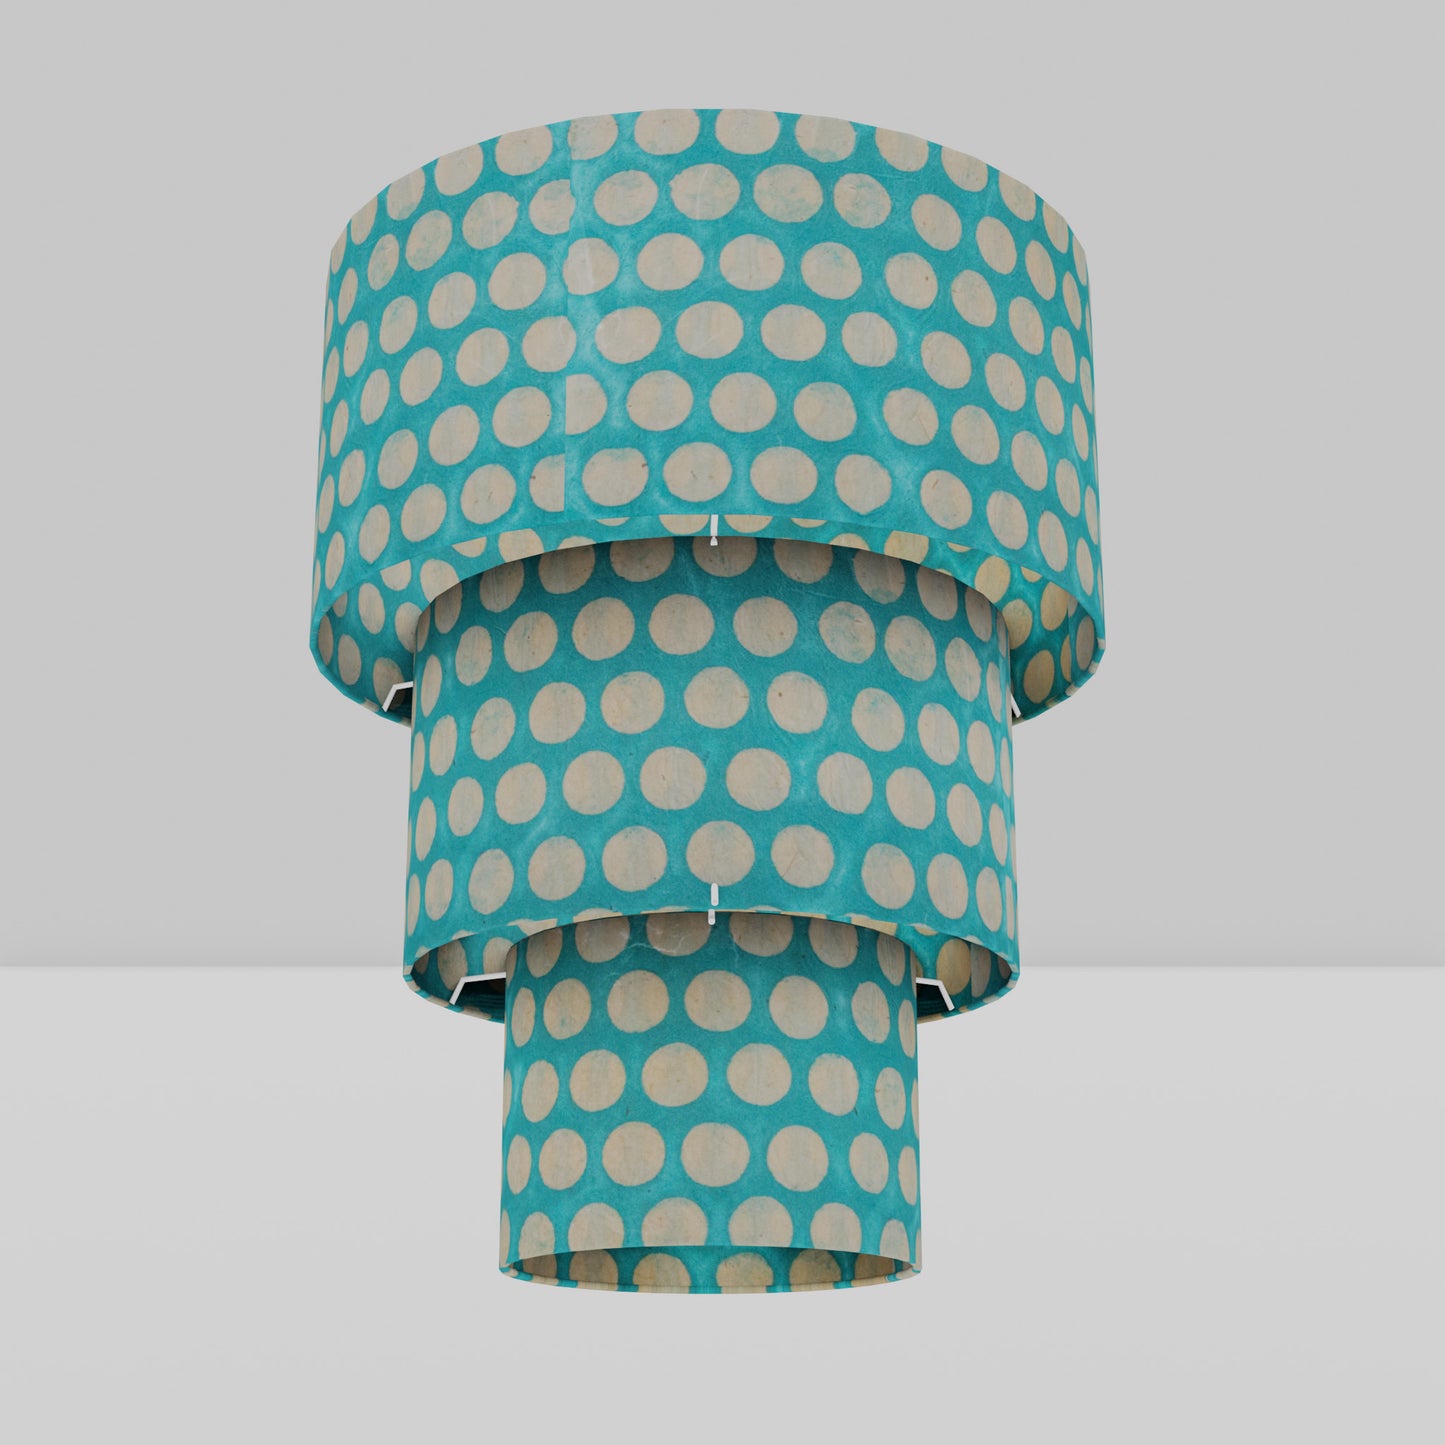 3 Tier Lamp Shade - P97 - Batik Dots on Cyan, 40cm x 20cm, 30cm x 17.5cm & 20cm x 15cm